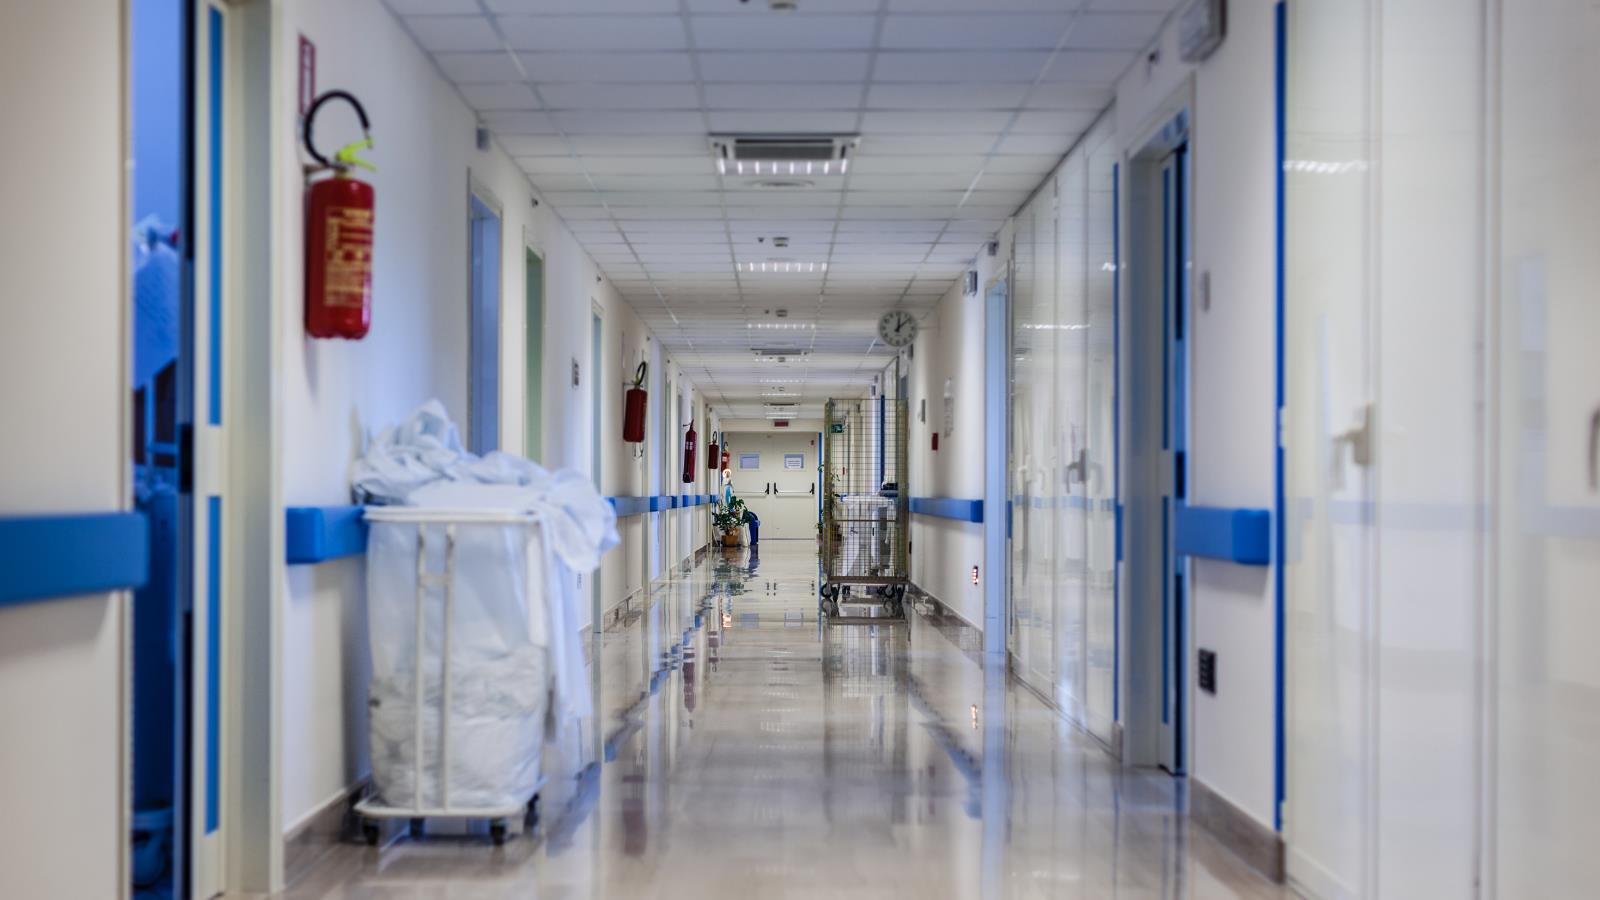 photo of an empty hospital hallway